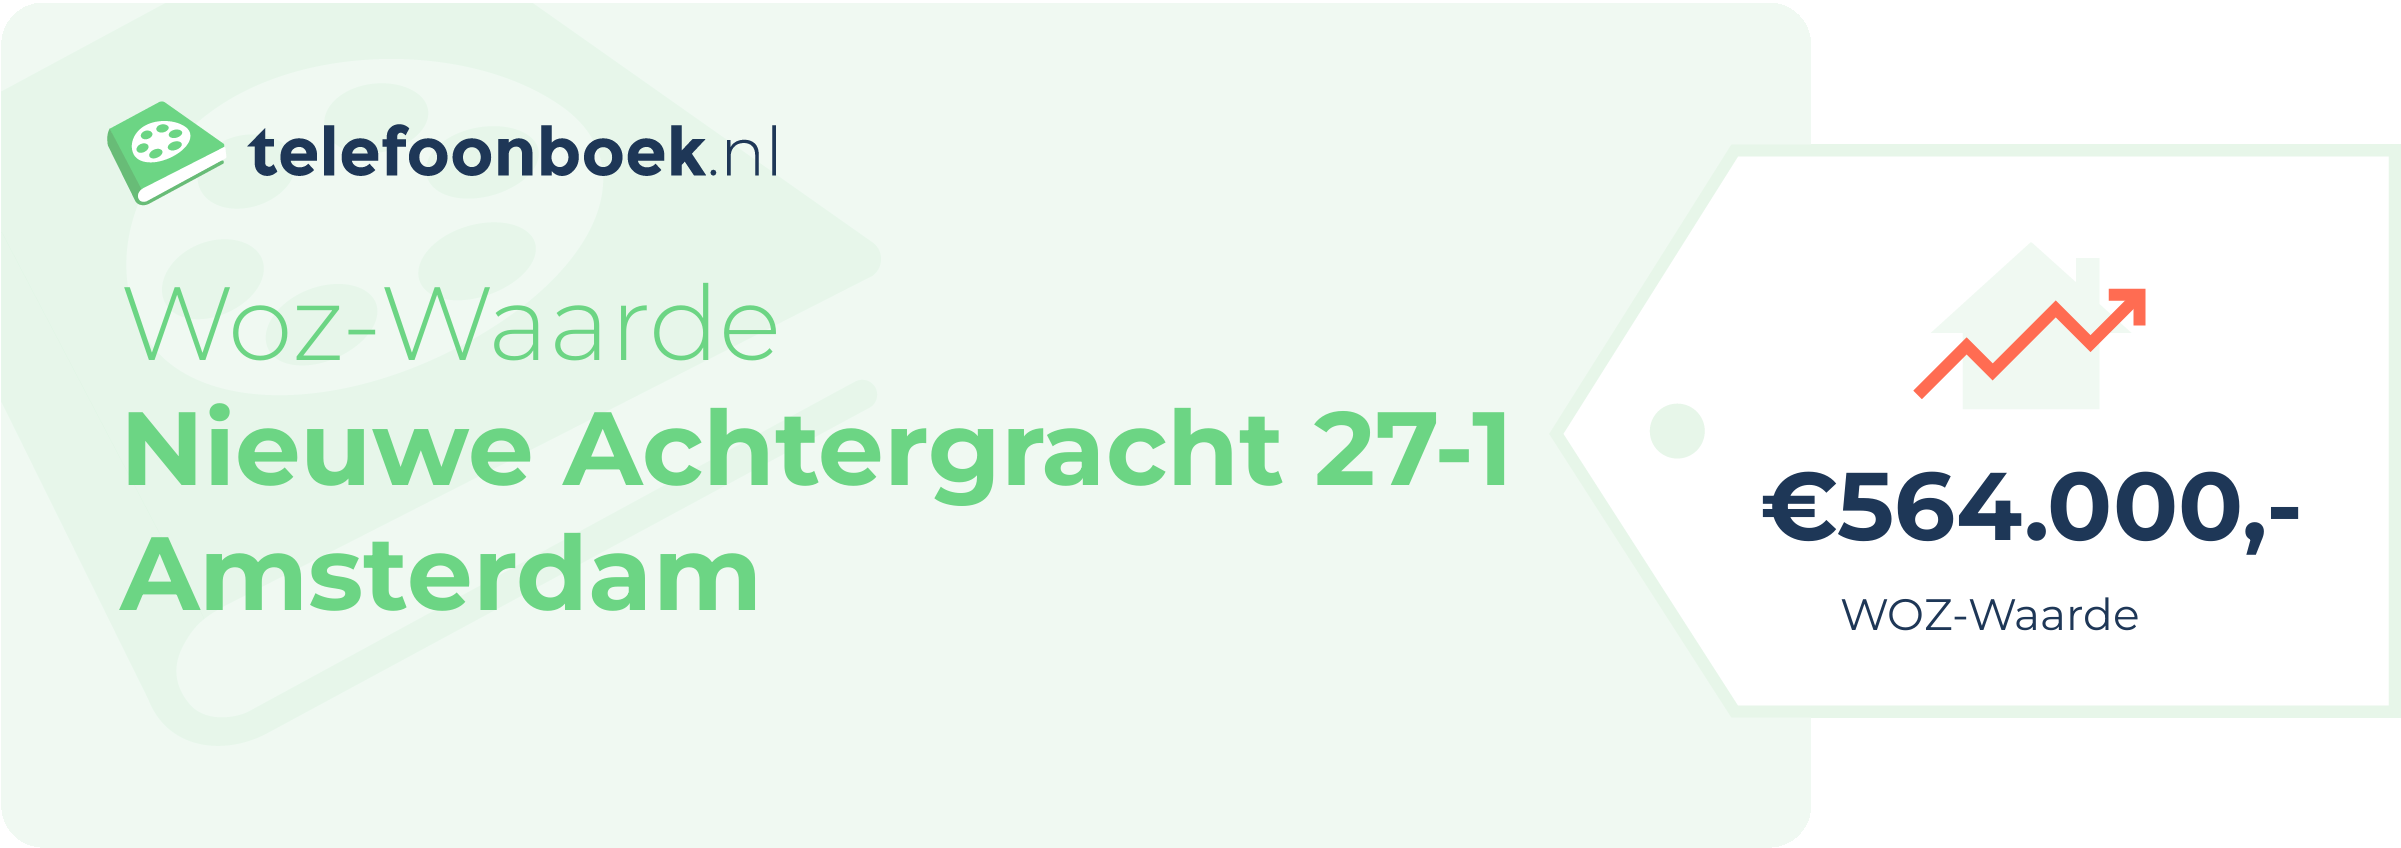 WOZ-waarde Nieuwe Achtergracht 27-1 Amsterdam